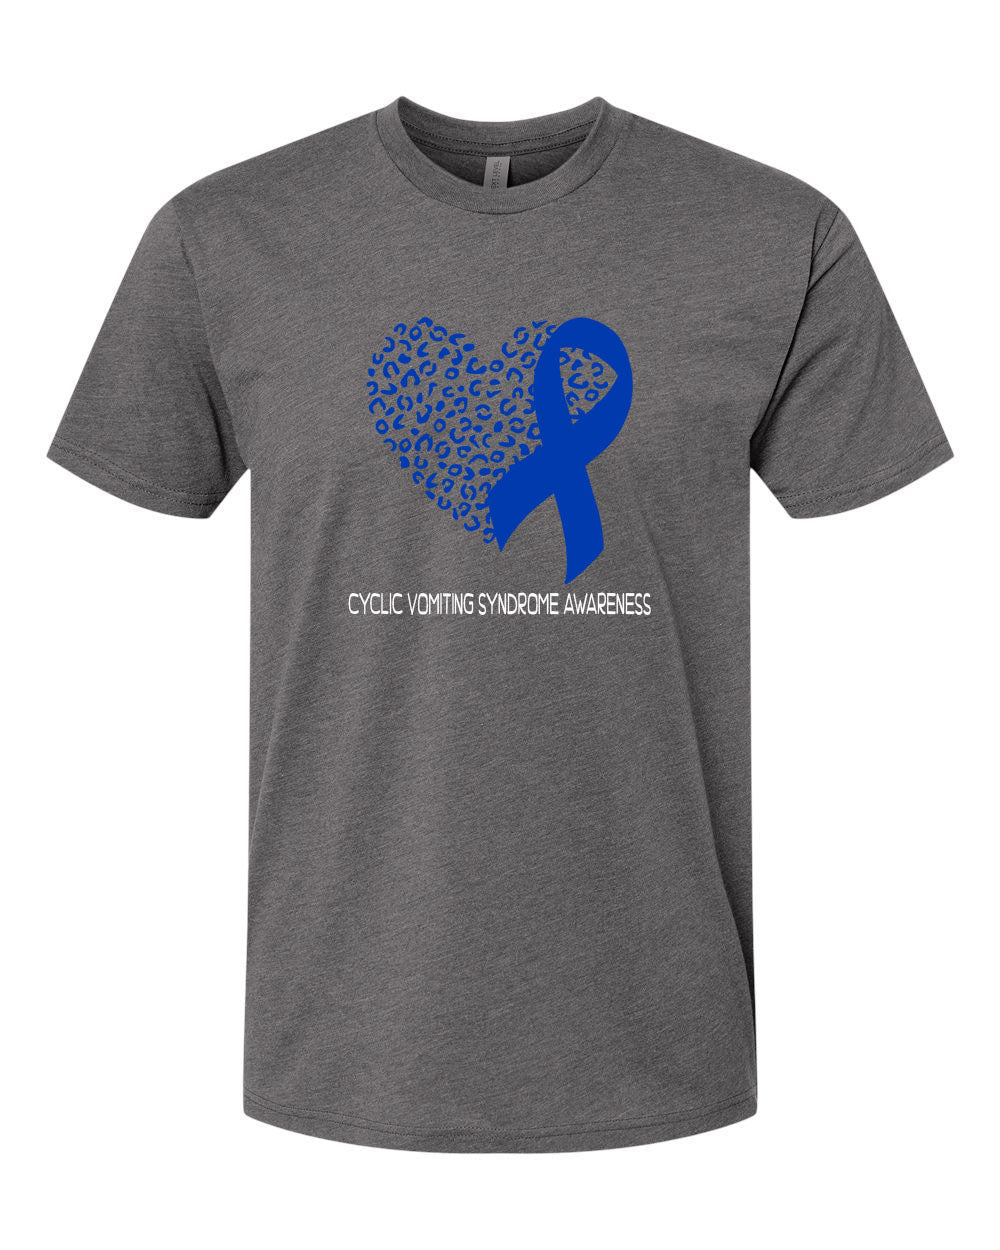 CVS Awareness T-Shirt, Cyclic vomiting Syndrome